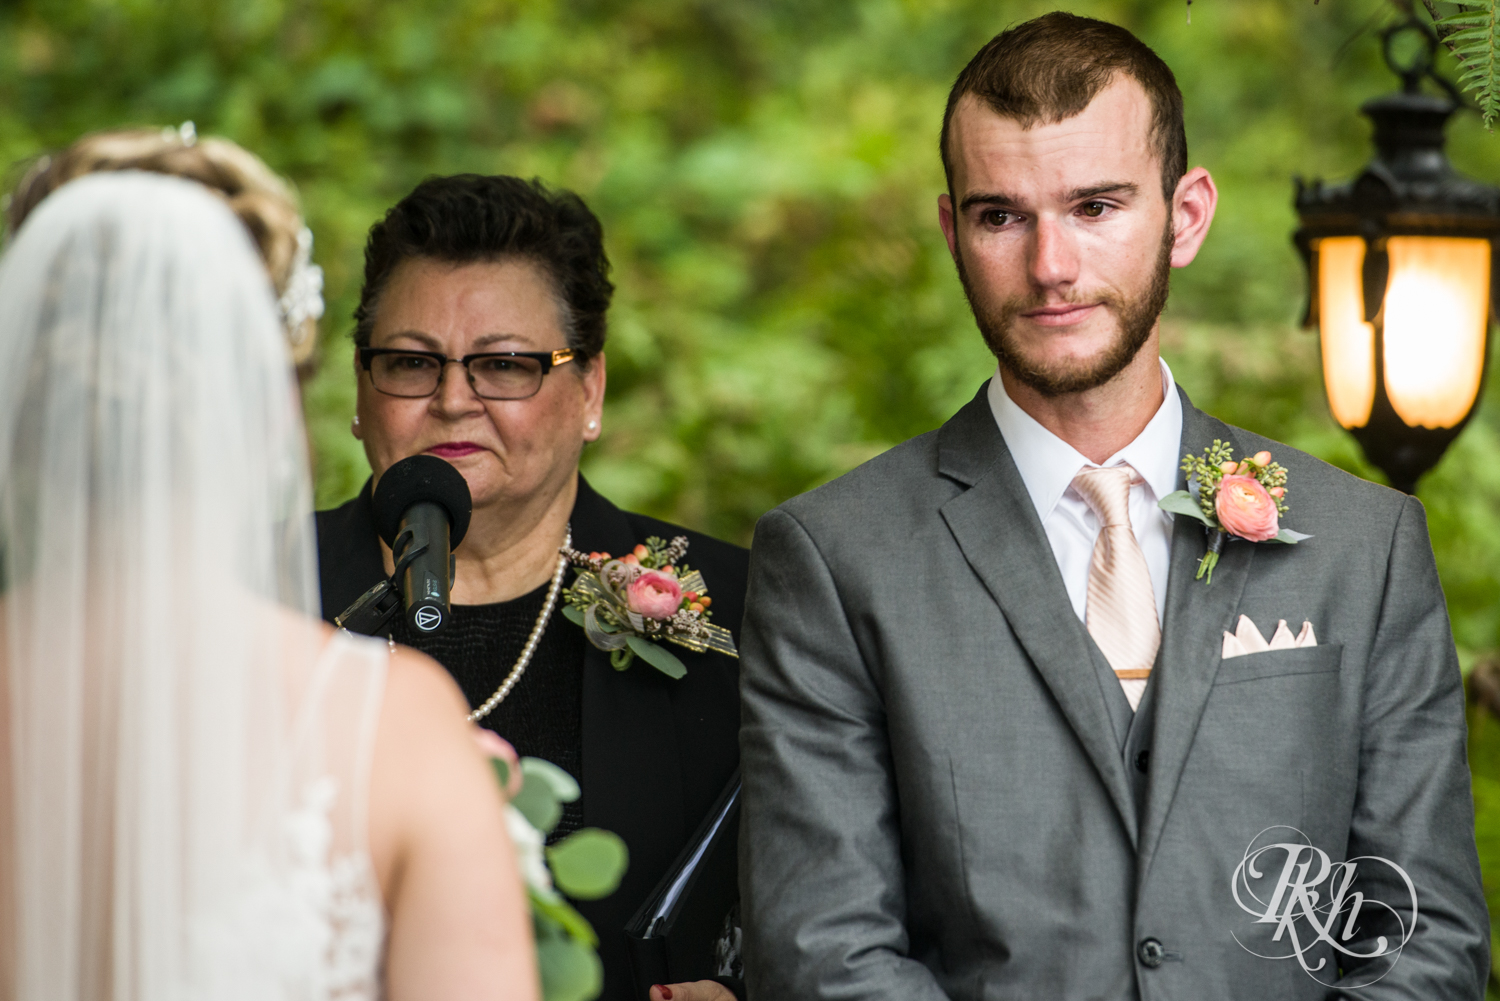 Groom cries seeing bride walk down the aisle Camrose Hill Flower Farm in the rain in Stillwater, Minnesota.